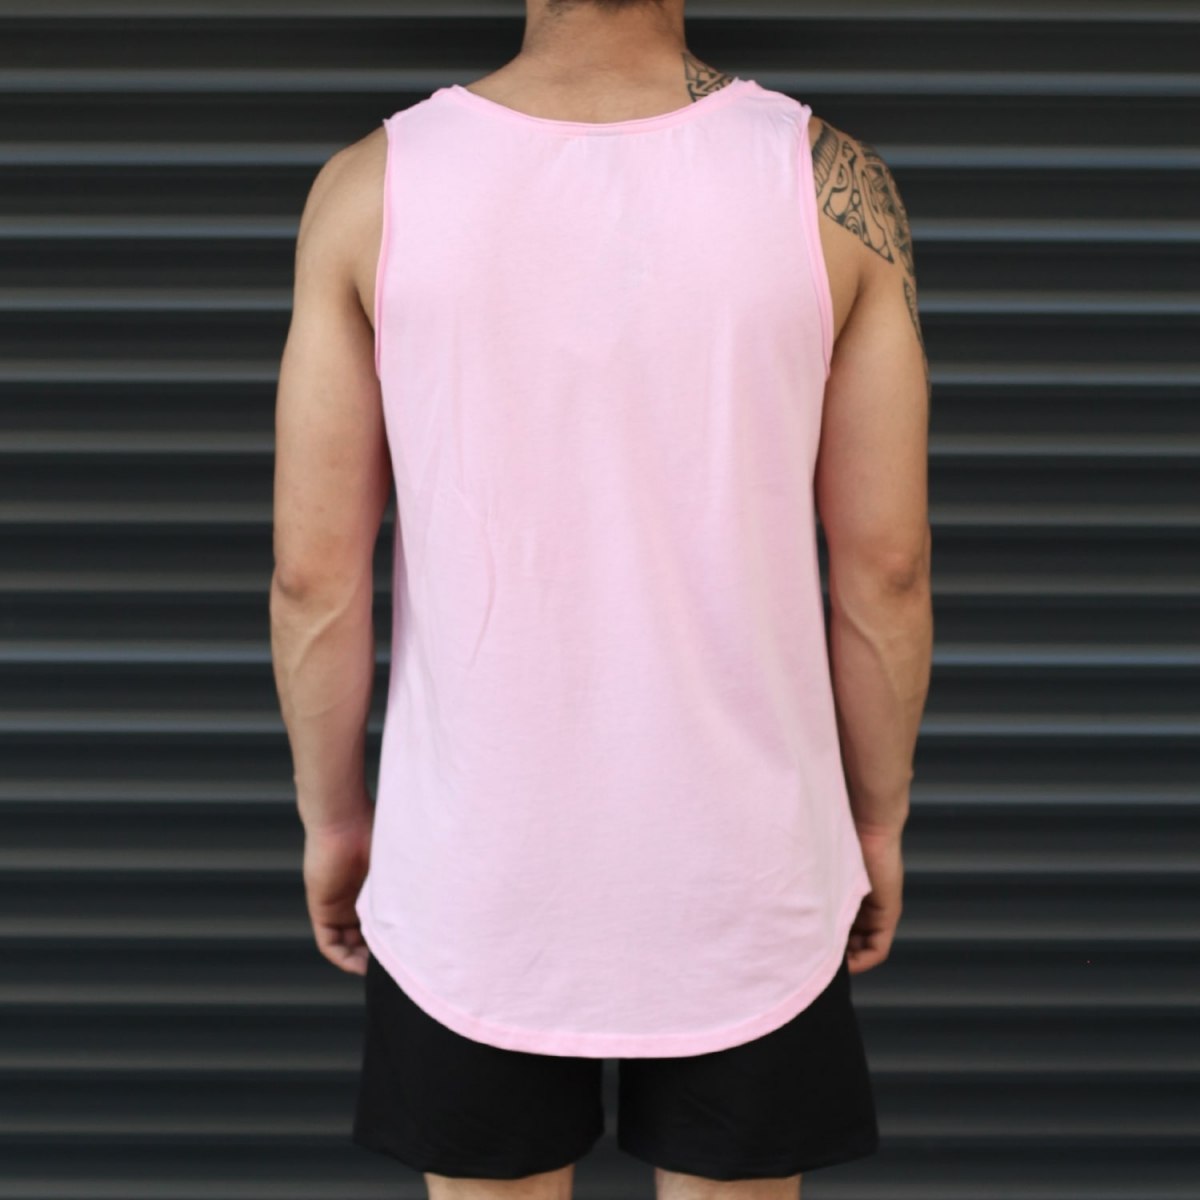 Men's Athletic Sleeveless Longling Tank Top Pink - 3